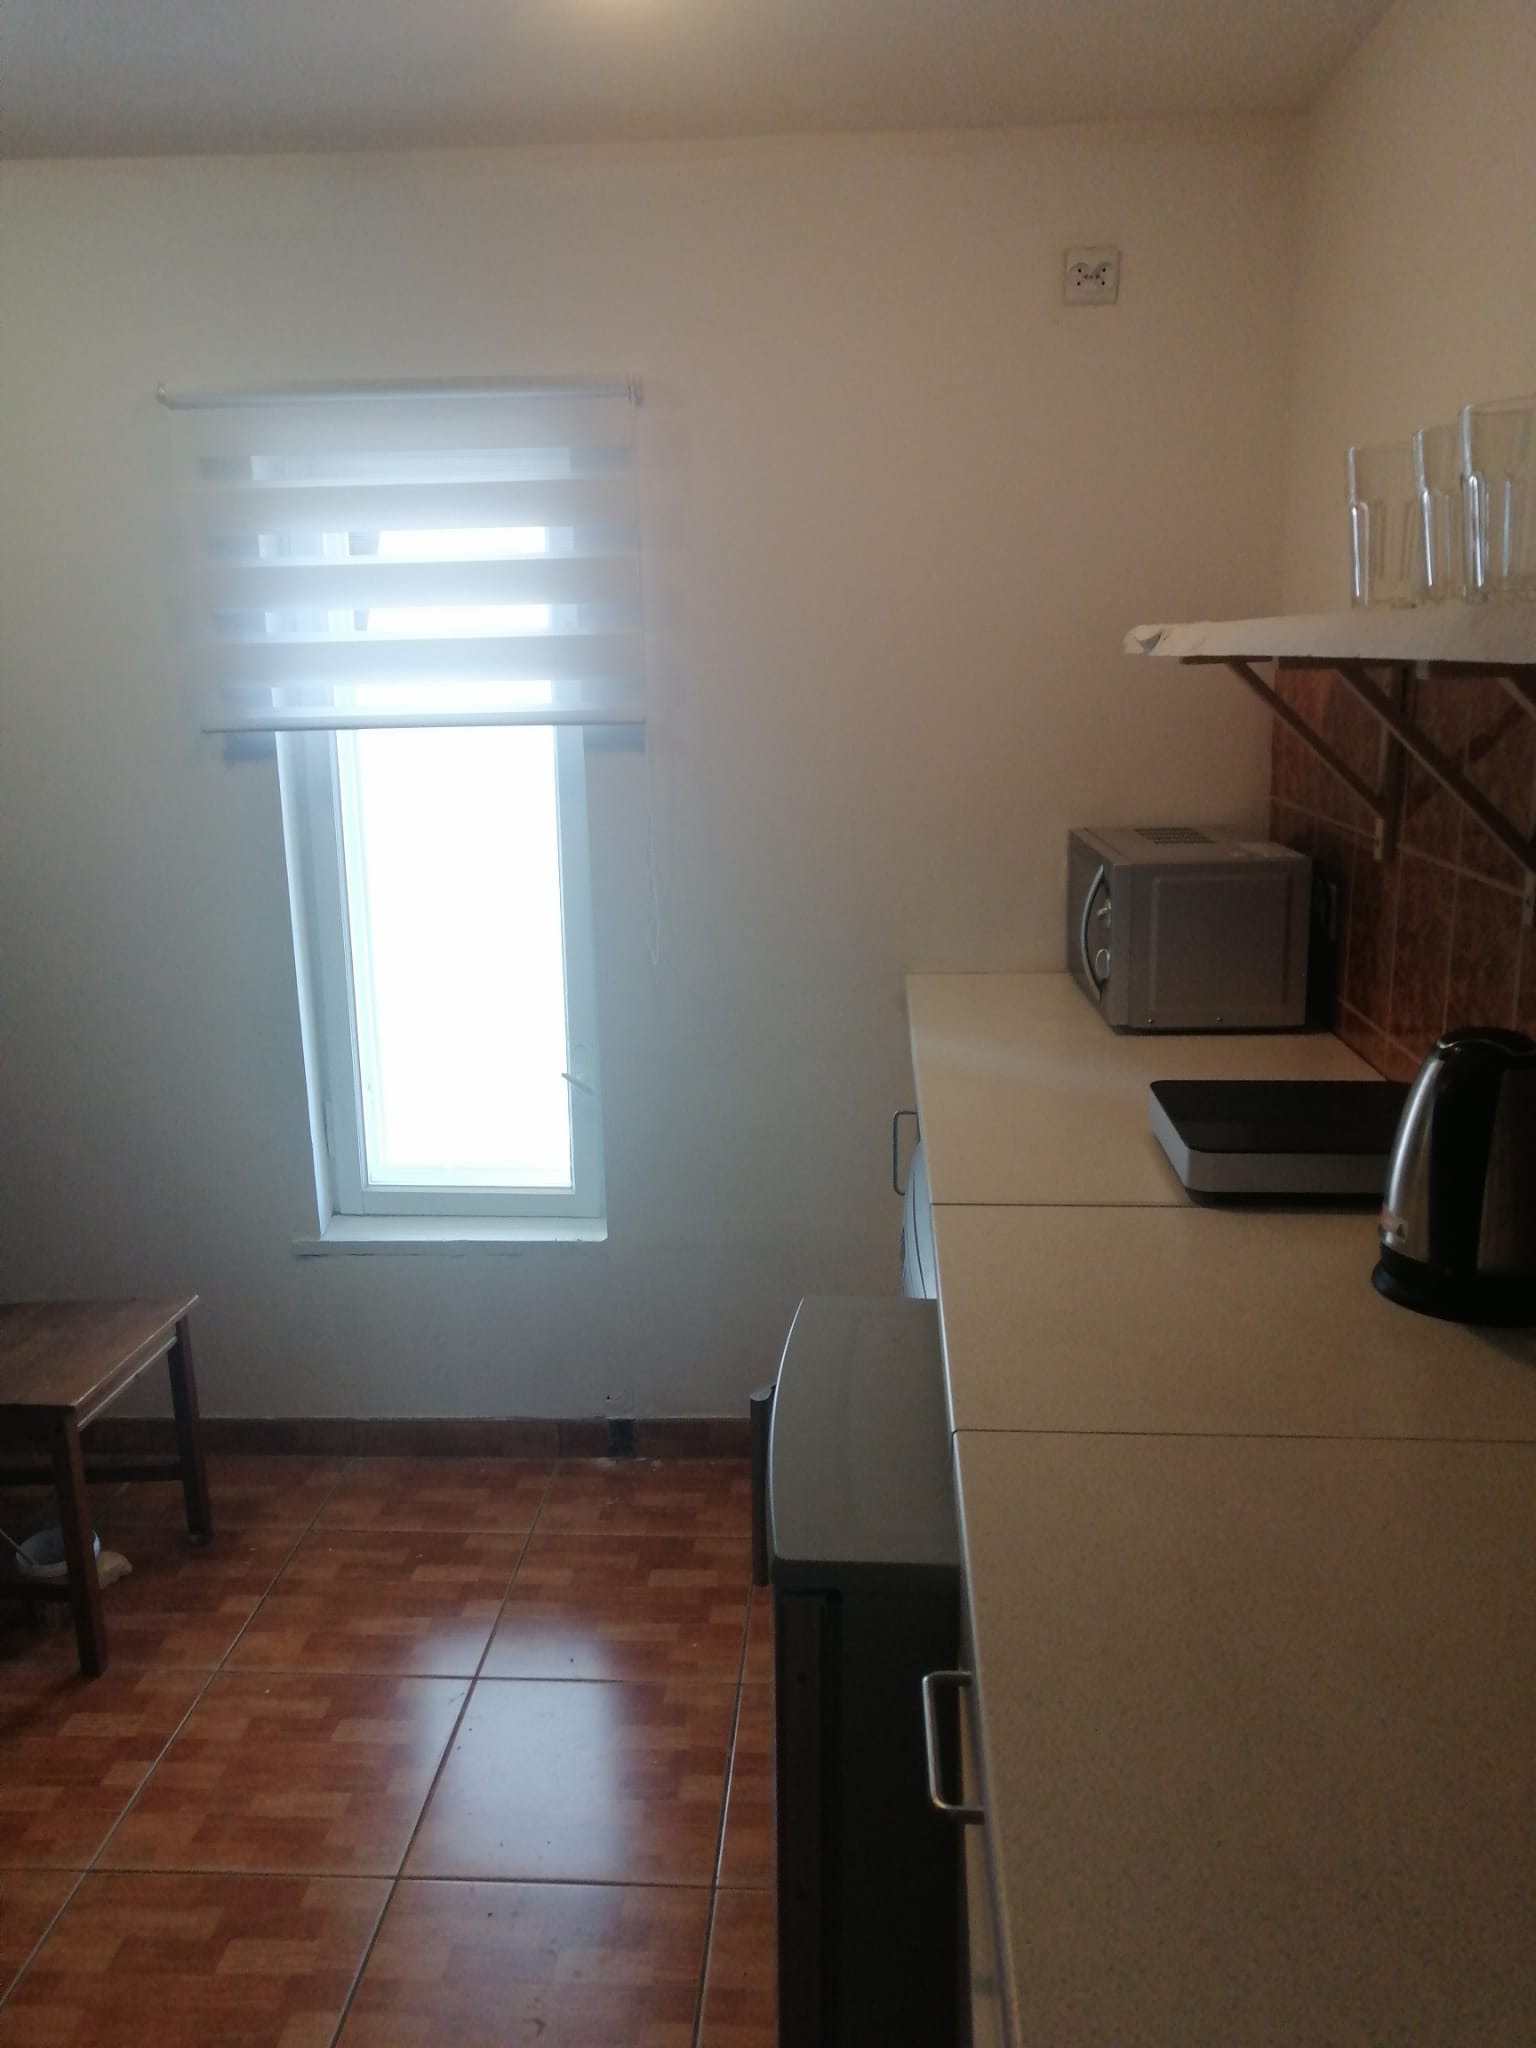 Kitchen area of apartment